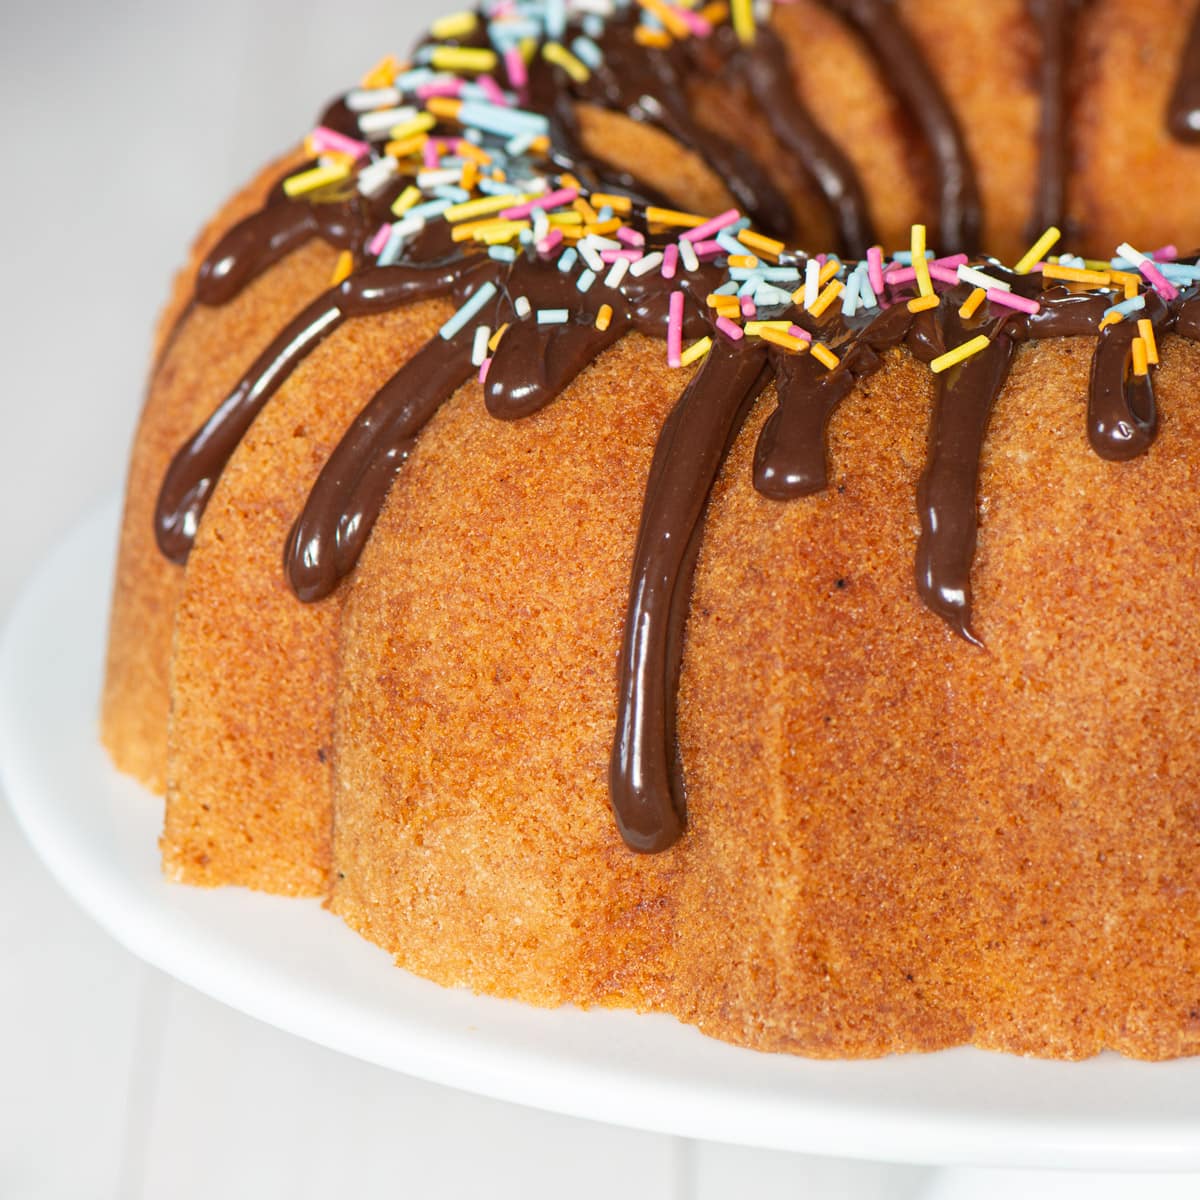 Vanilla bundt cake topped with milk chocolate ganache and sprinkles.